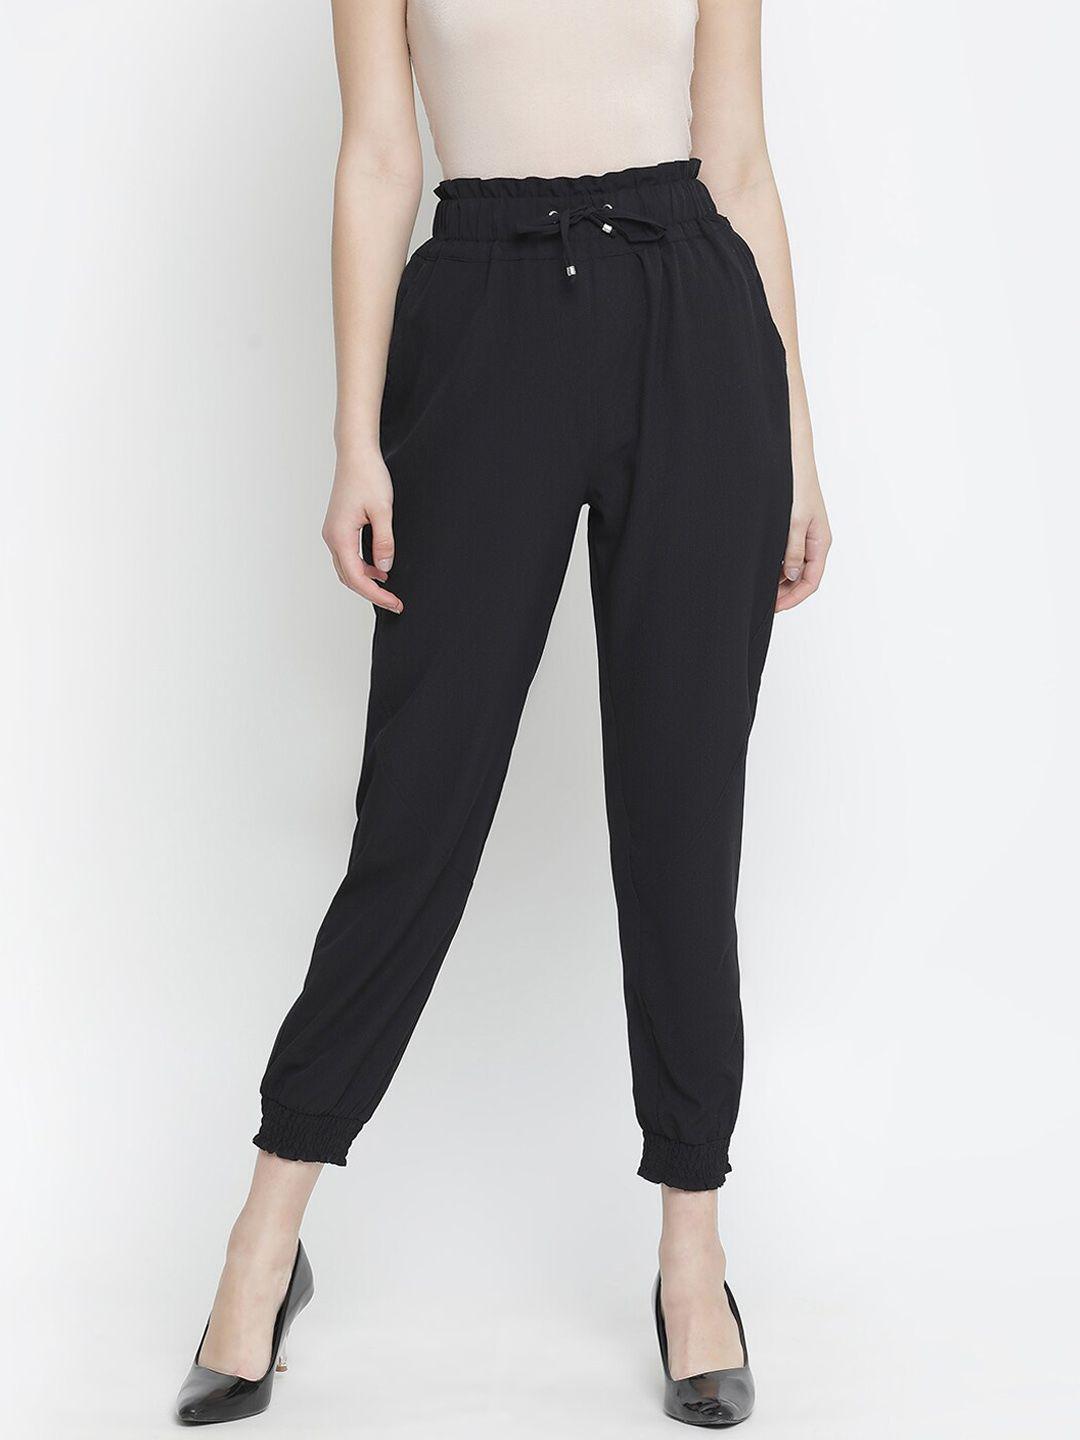 oxolloxo-women-black-trousers